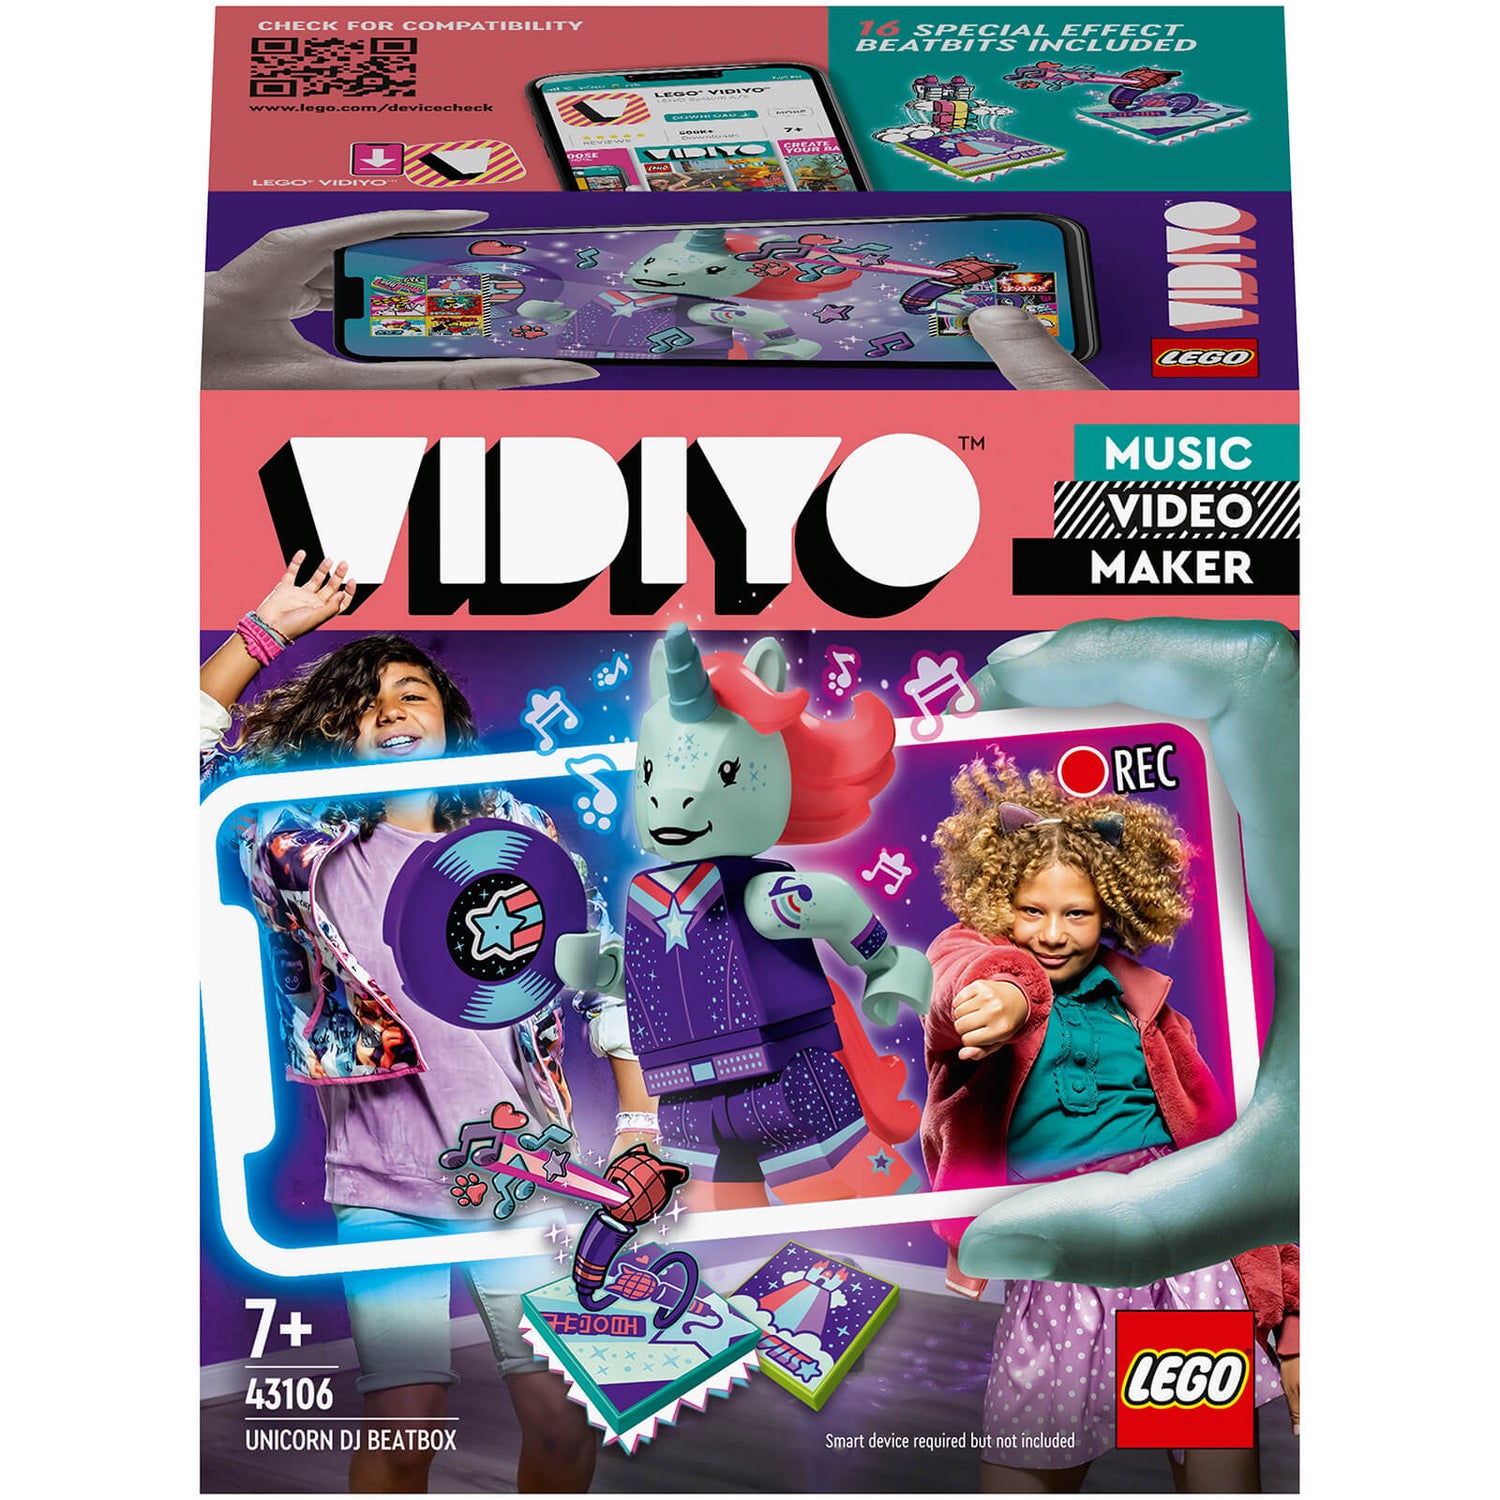 LEGO VIDIYO Unicorn DJ BeatBox Music Video Maker Toy (43106)